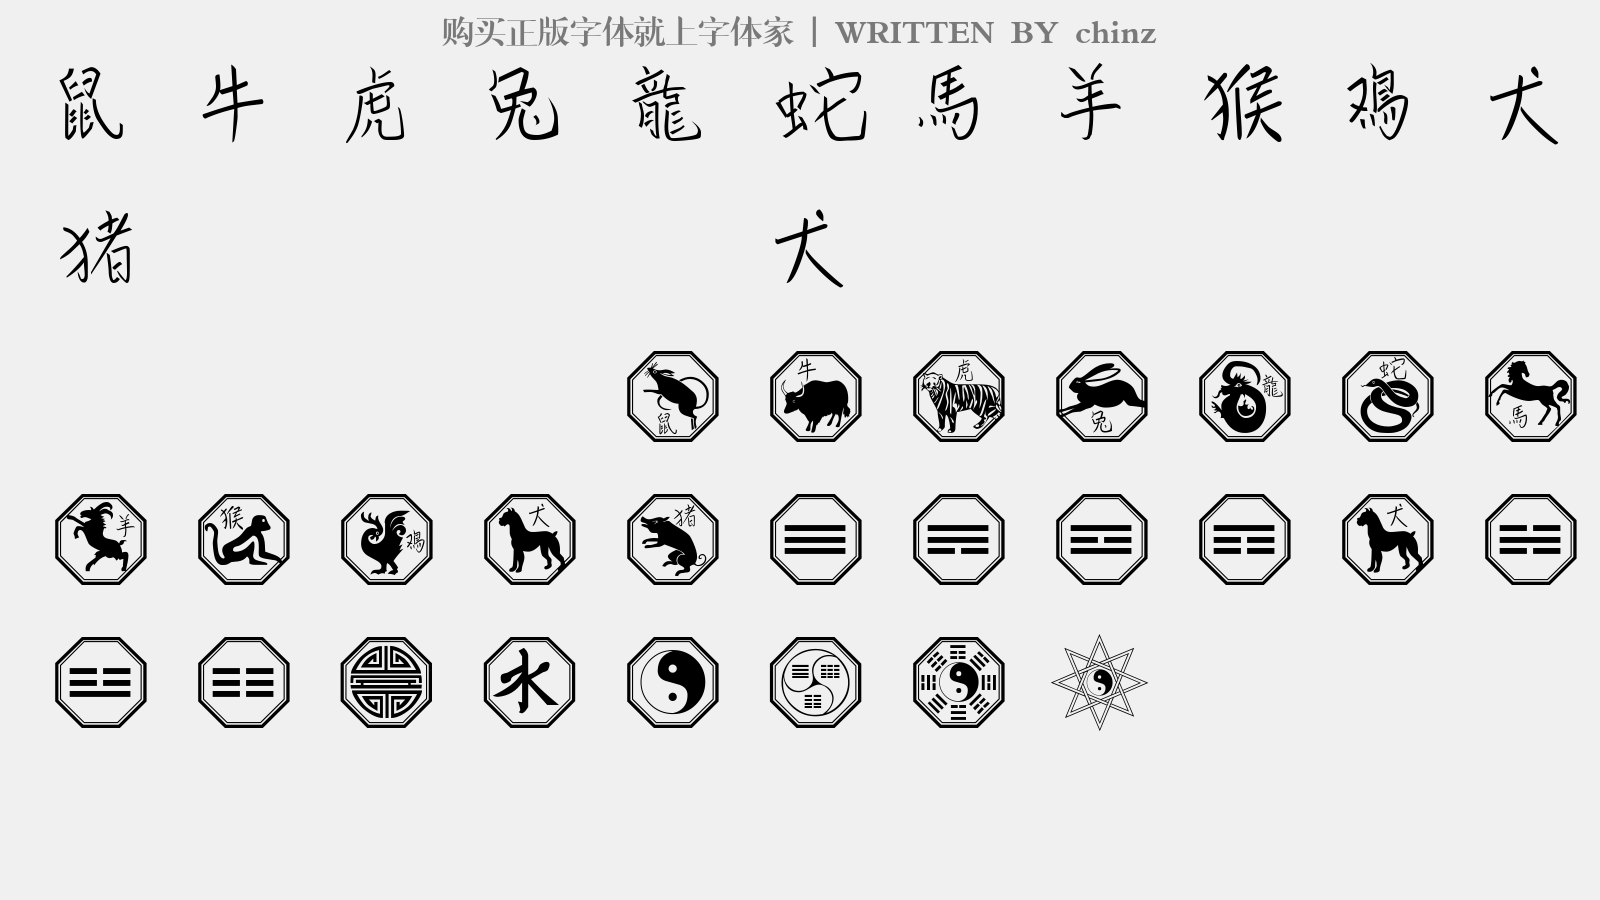 chinz - 大写字母/小写字母/数字